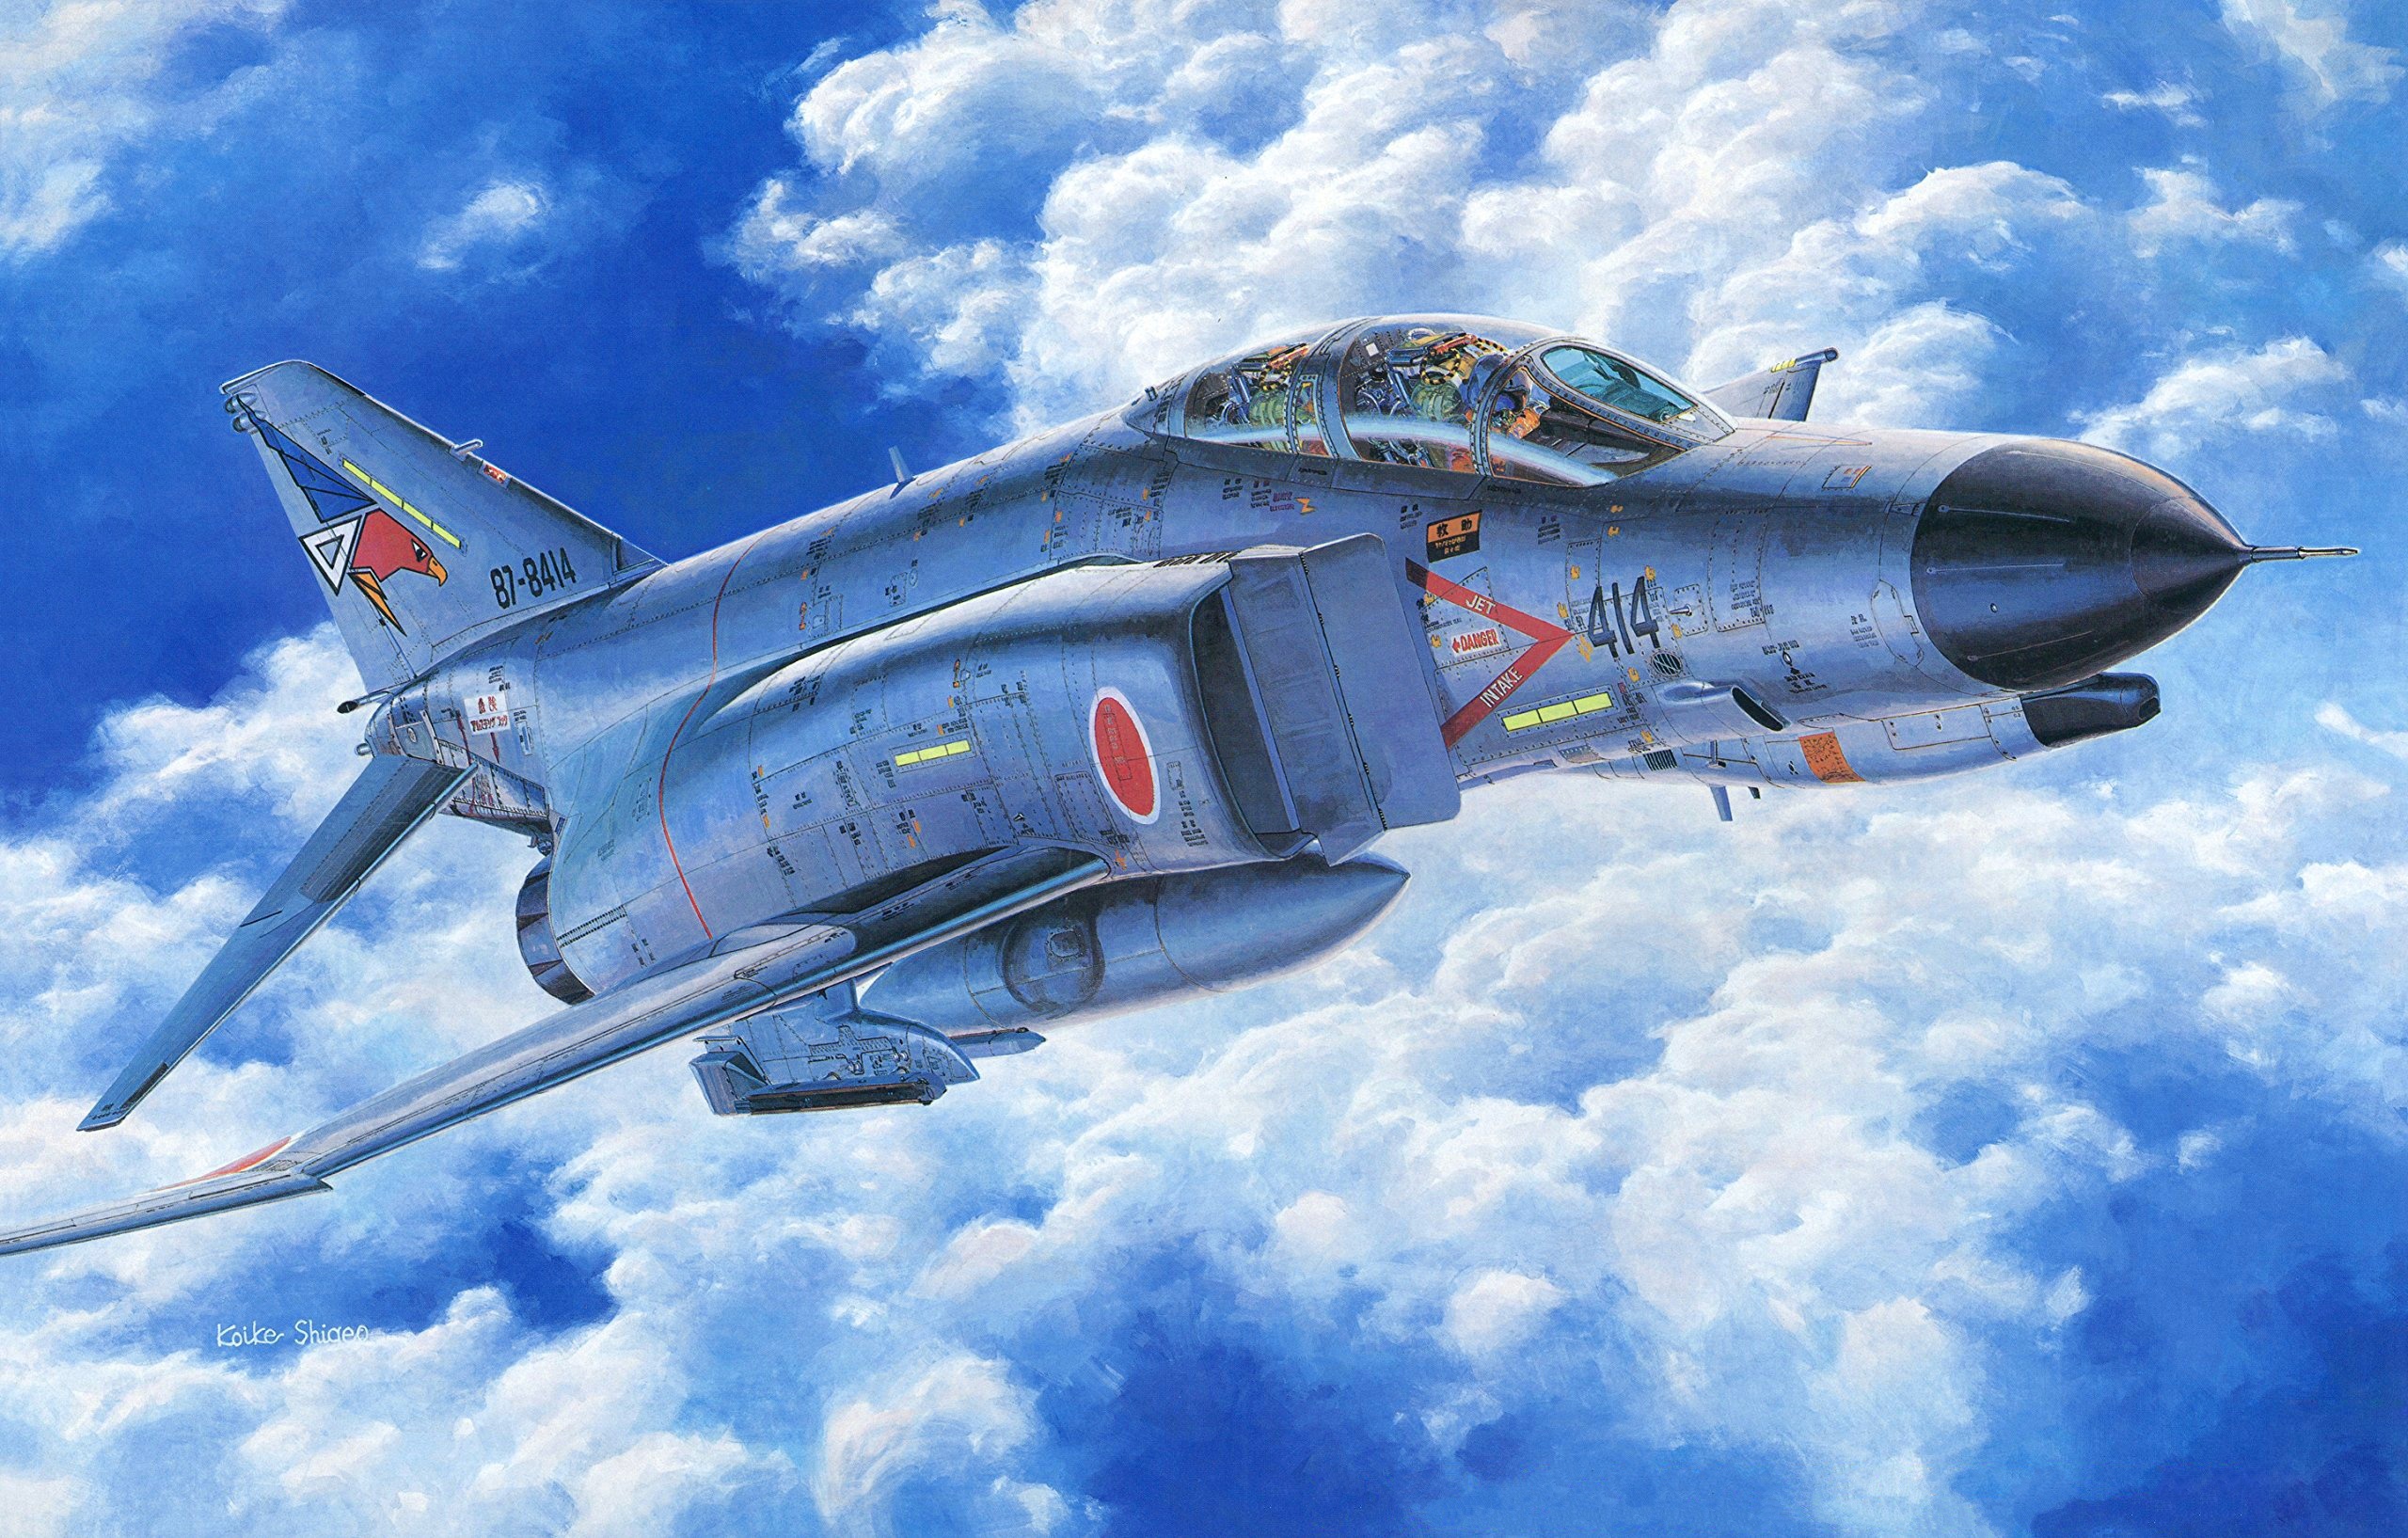 McDonnell Douglas F-4 Phantom II HD Wallpaper Background Image 2560x1635 ID...